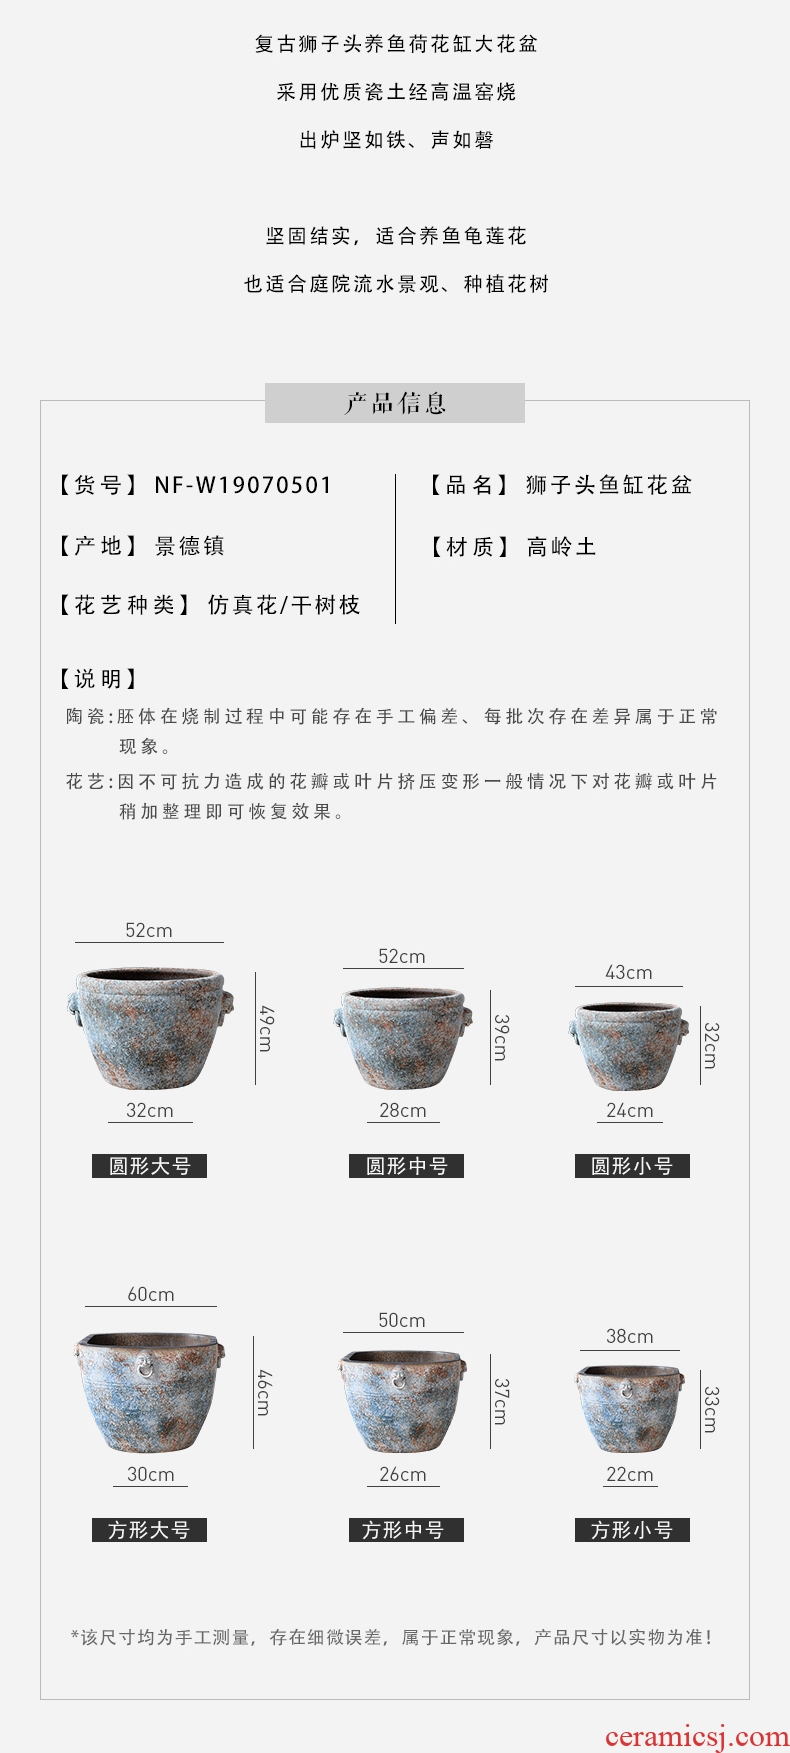 Ning hand - made sealed up with jingdezhen ceramic big vase furnishing articles sitting room put dry flower, antique Chinese blue and white porcelain vases - 598805199369